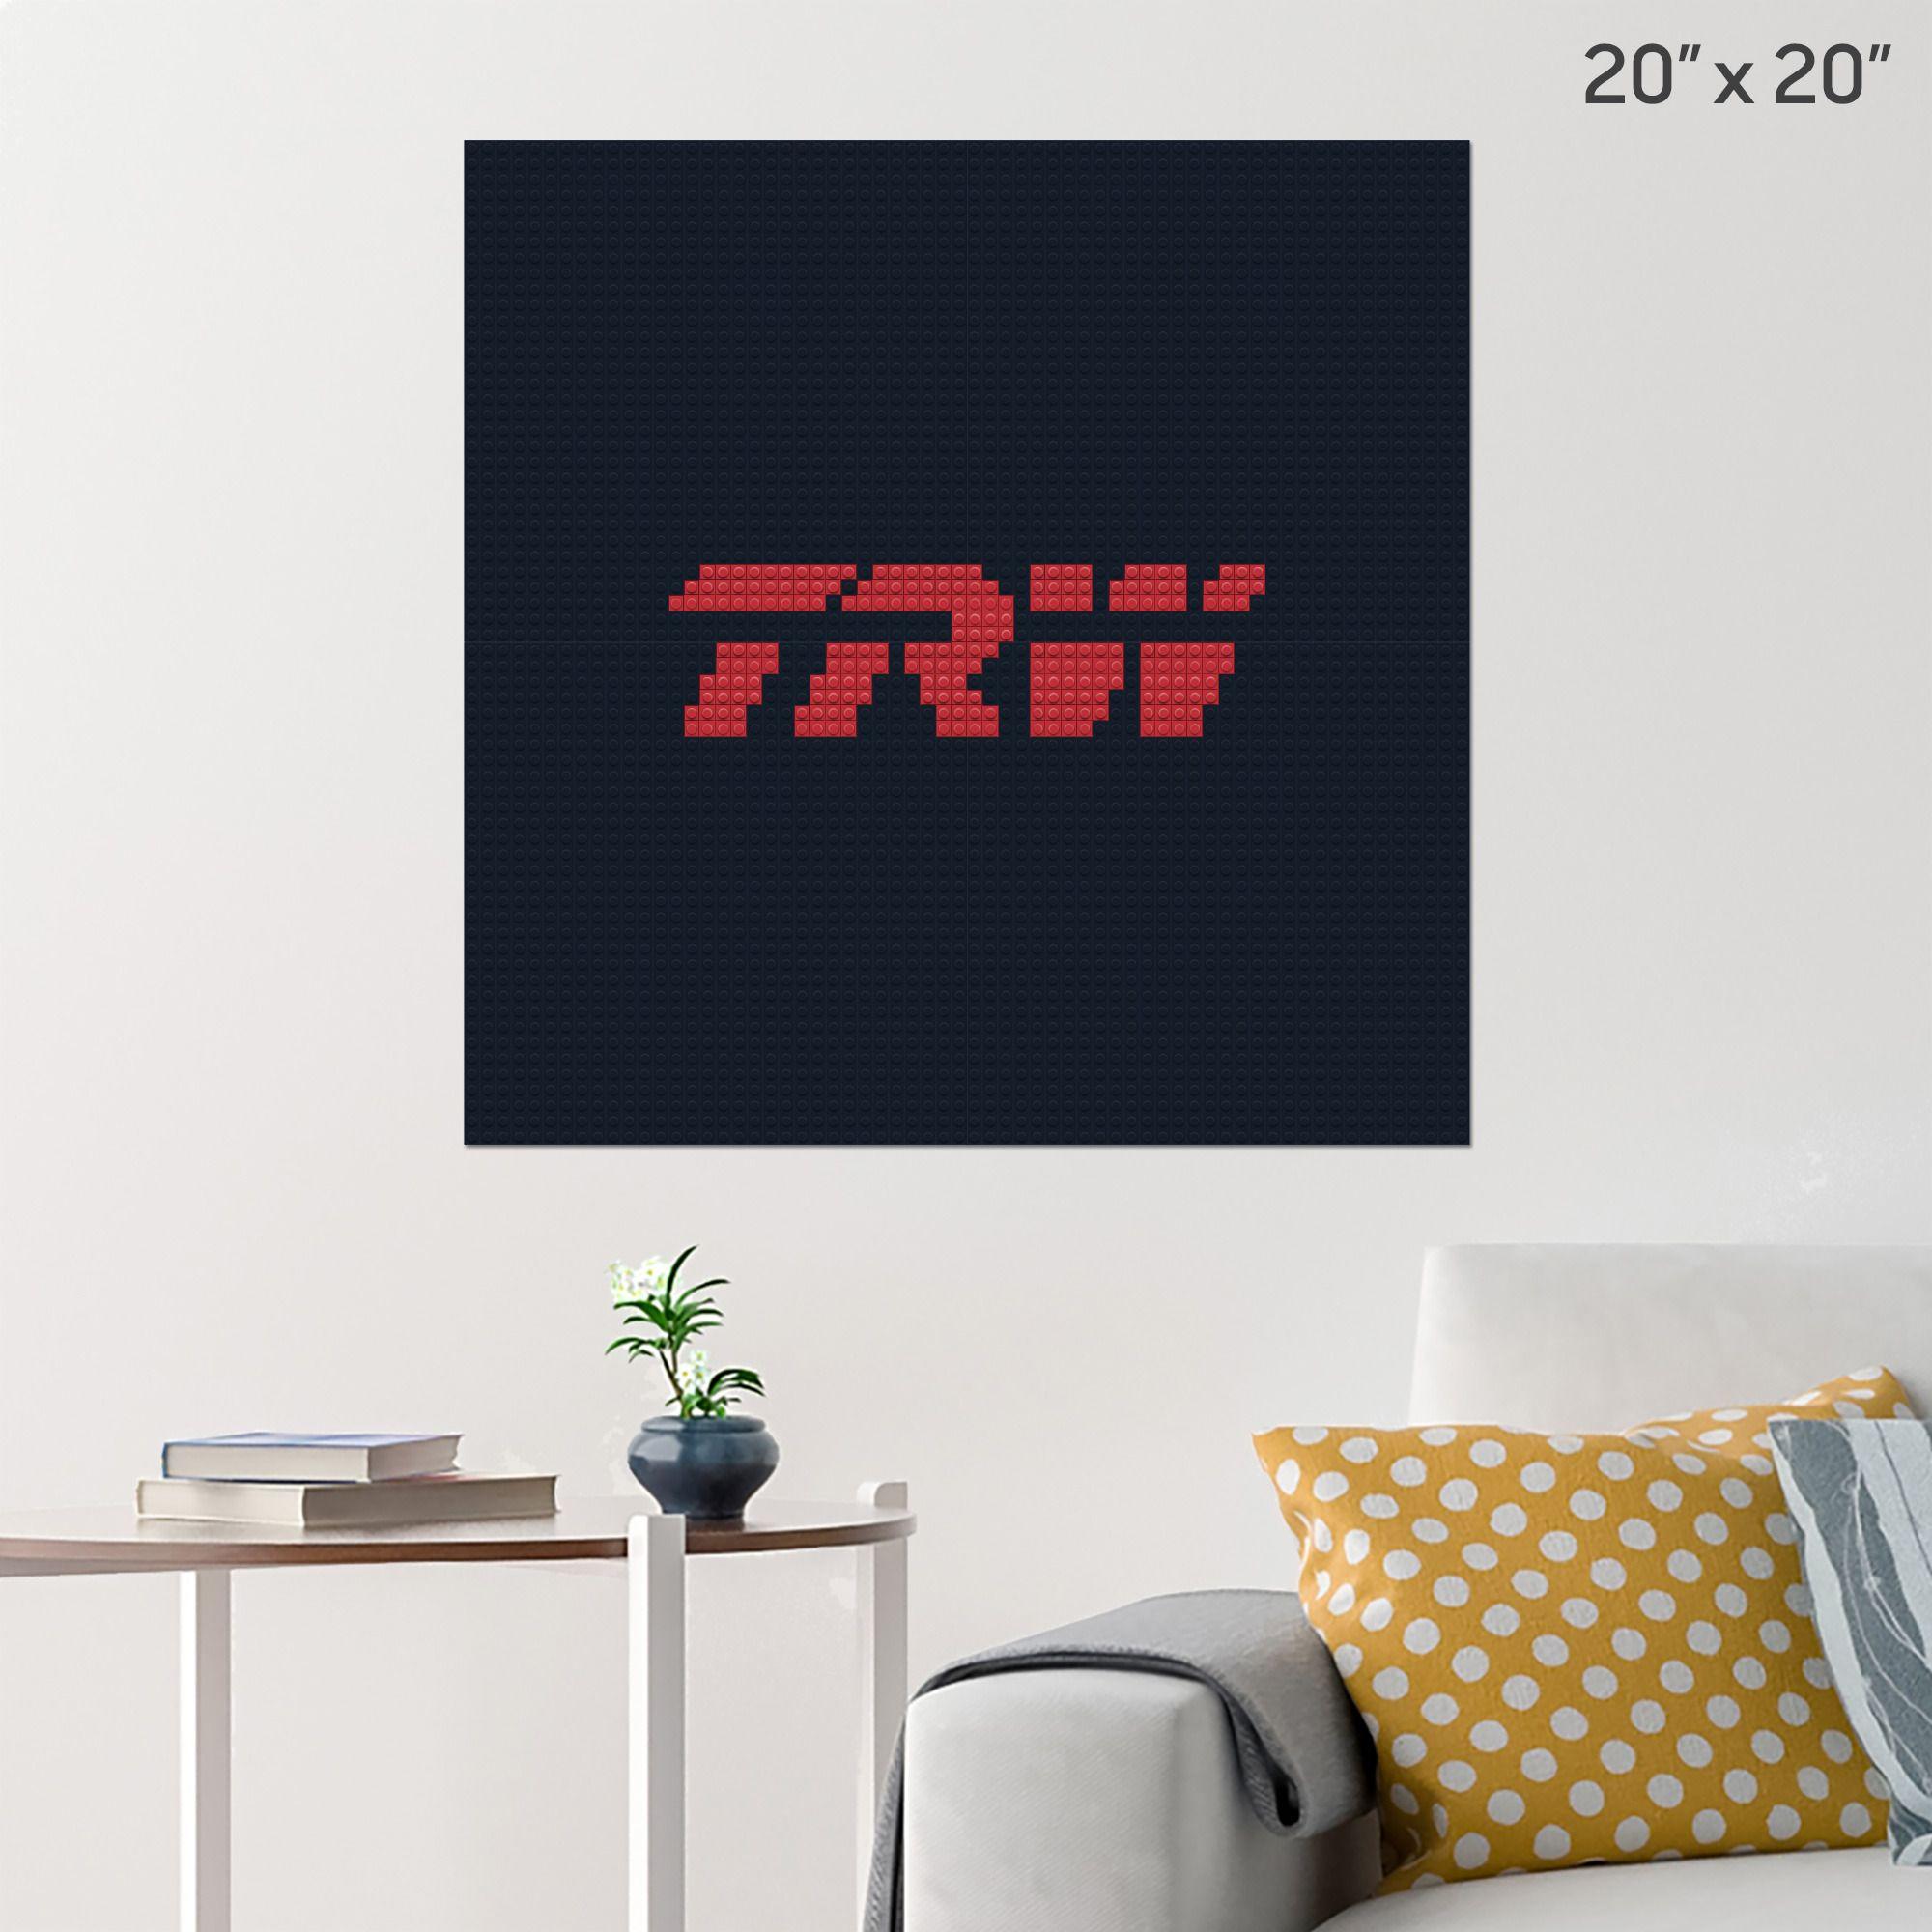 TRW Logo - TRW Automotive Holdings Corp. Logo Wall ...